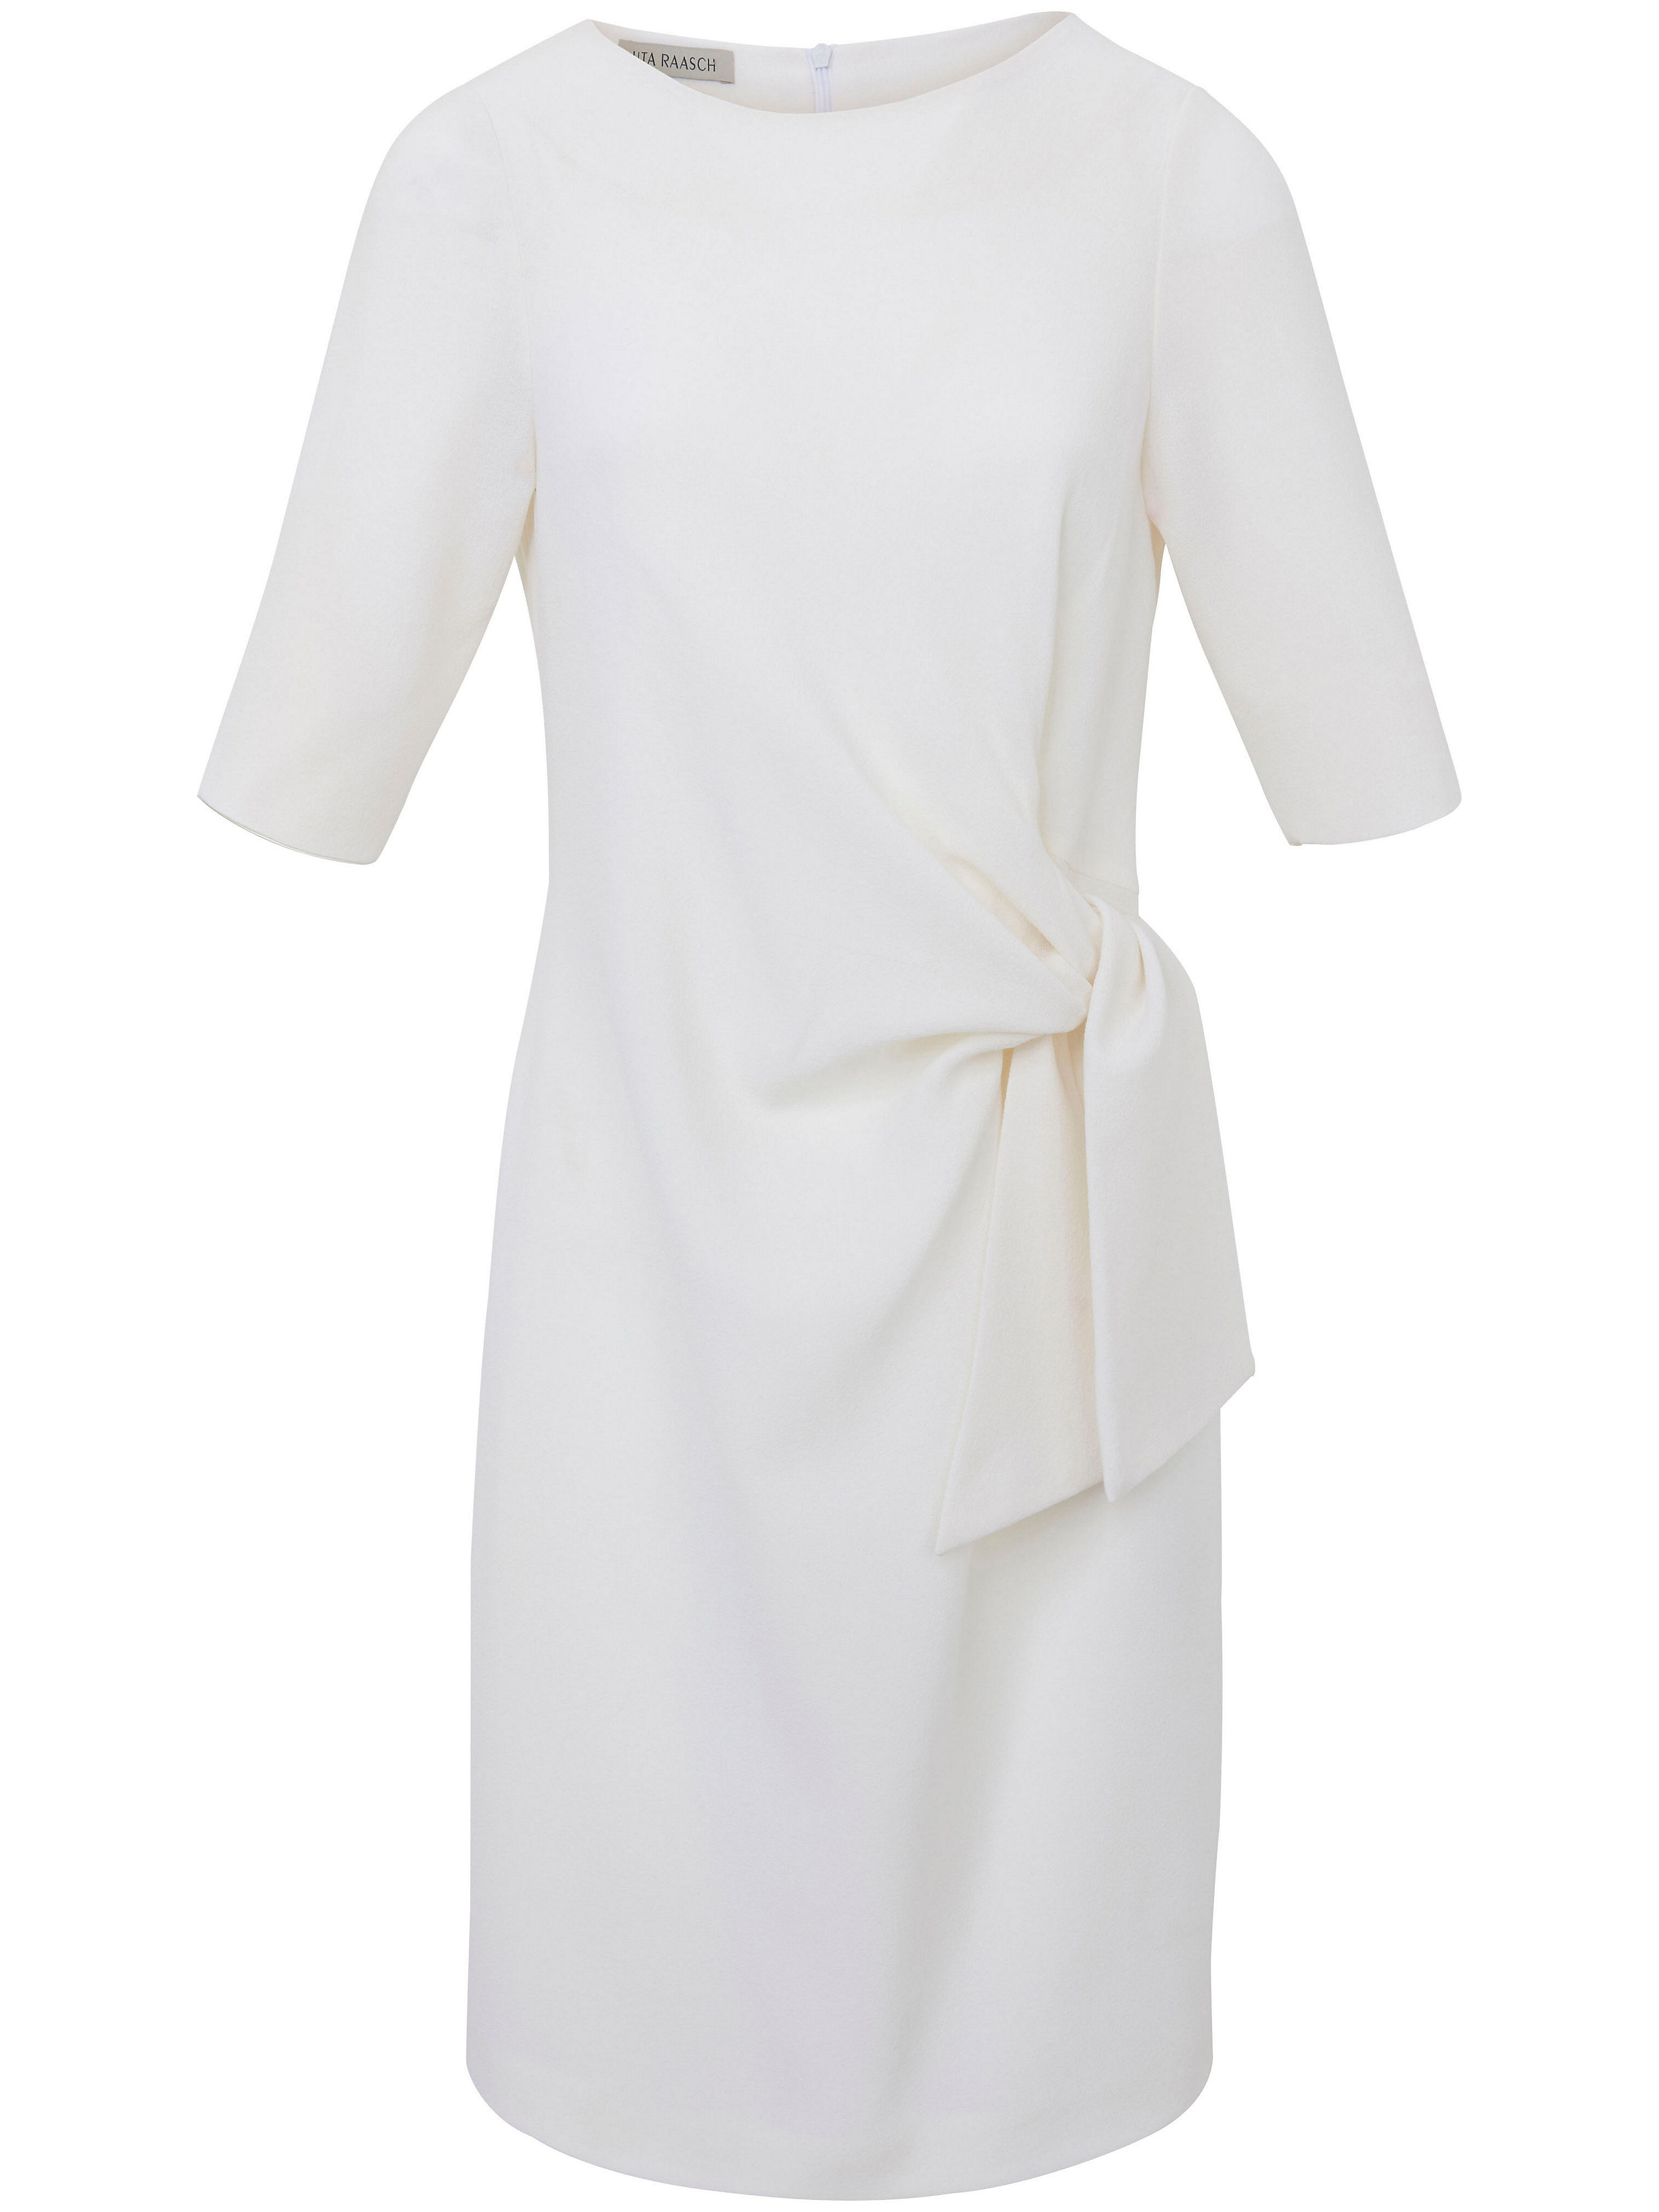 Uta Raasch jurk met 3/4-mouwen wit